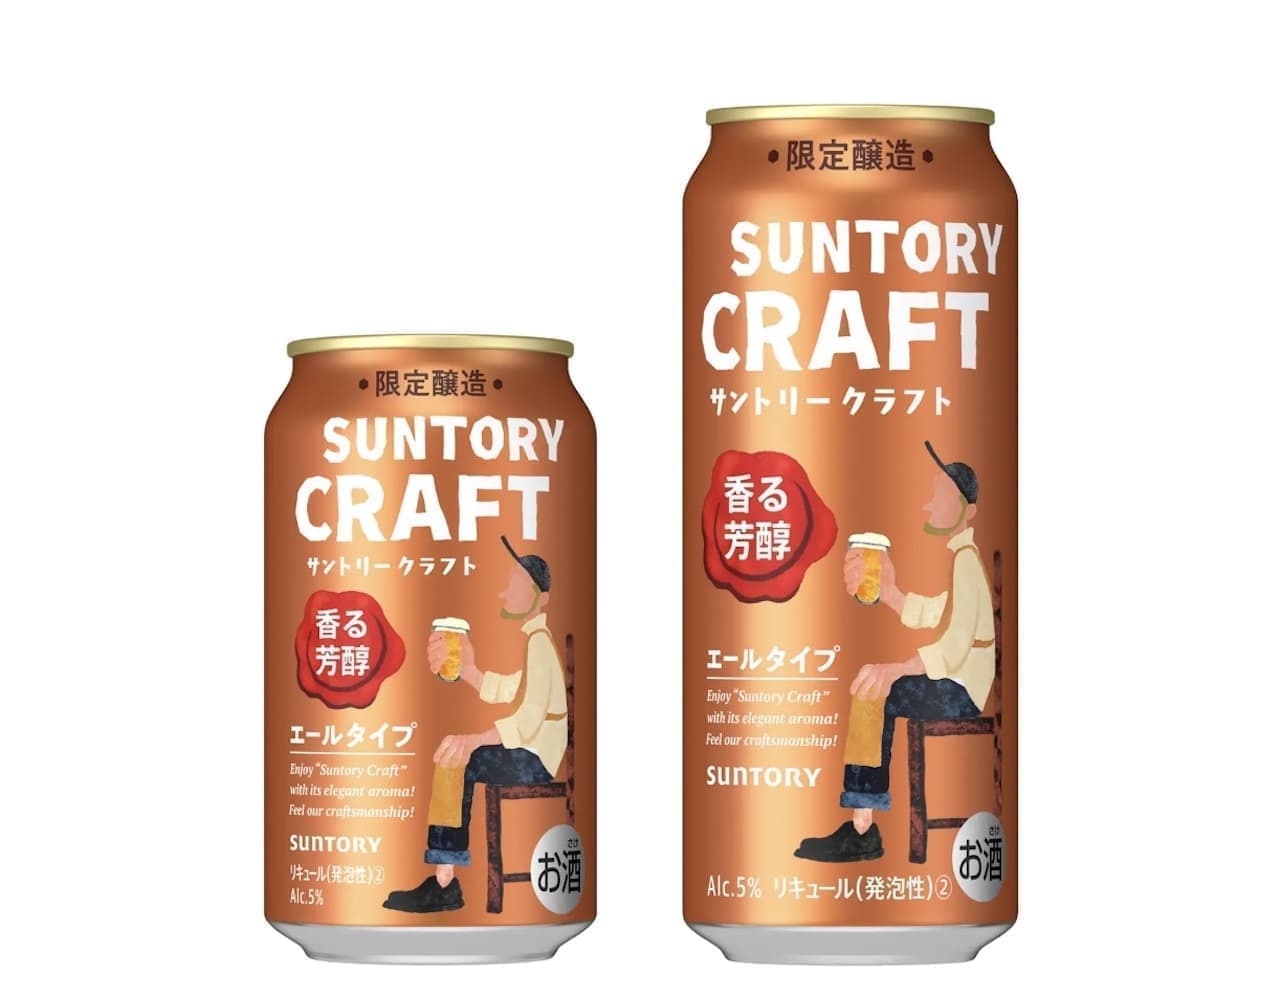 Suntory "Suntory Craft Aroma (ale type)" Suntory Craft